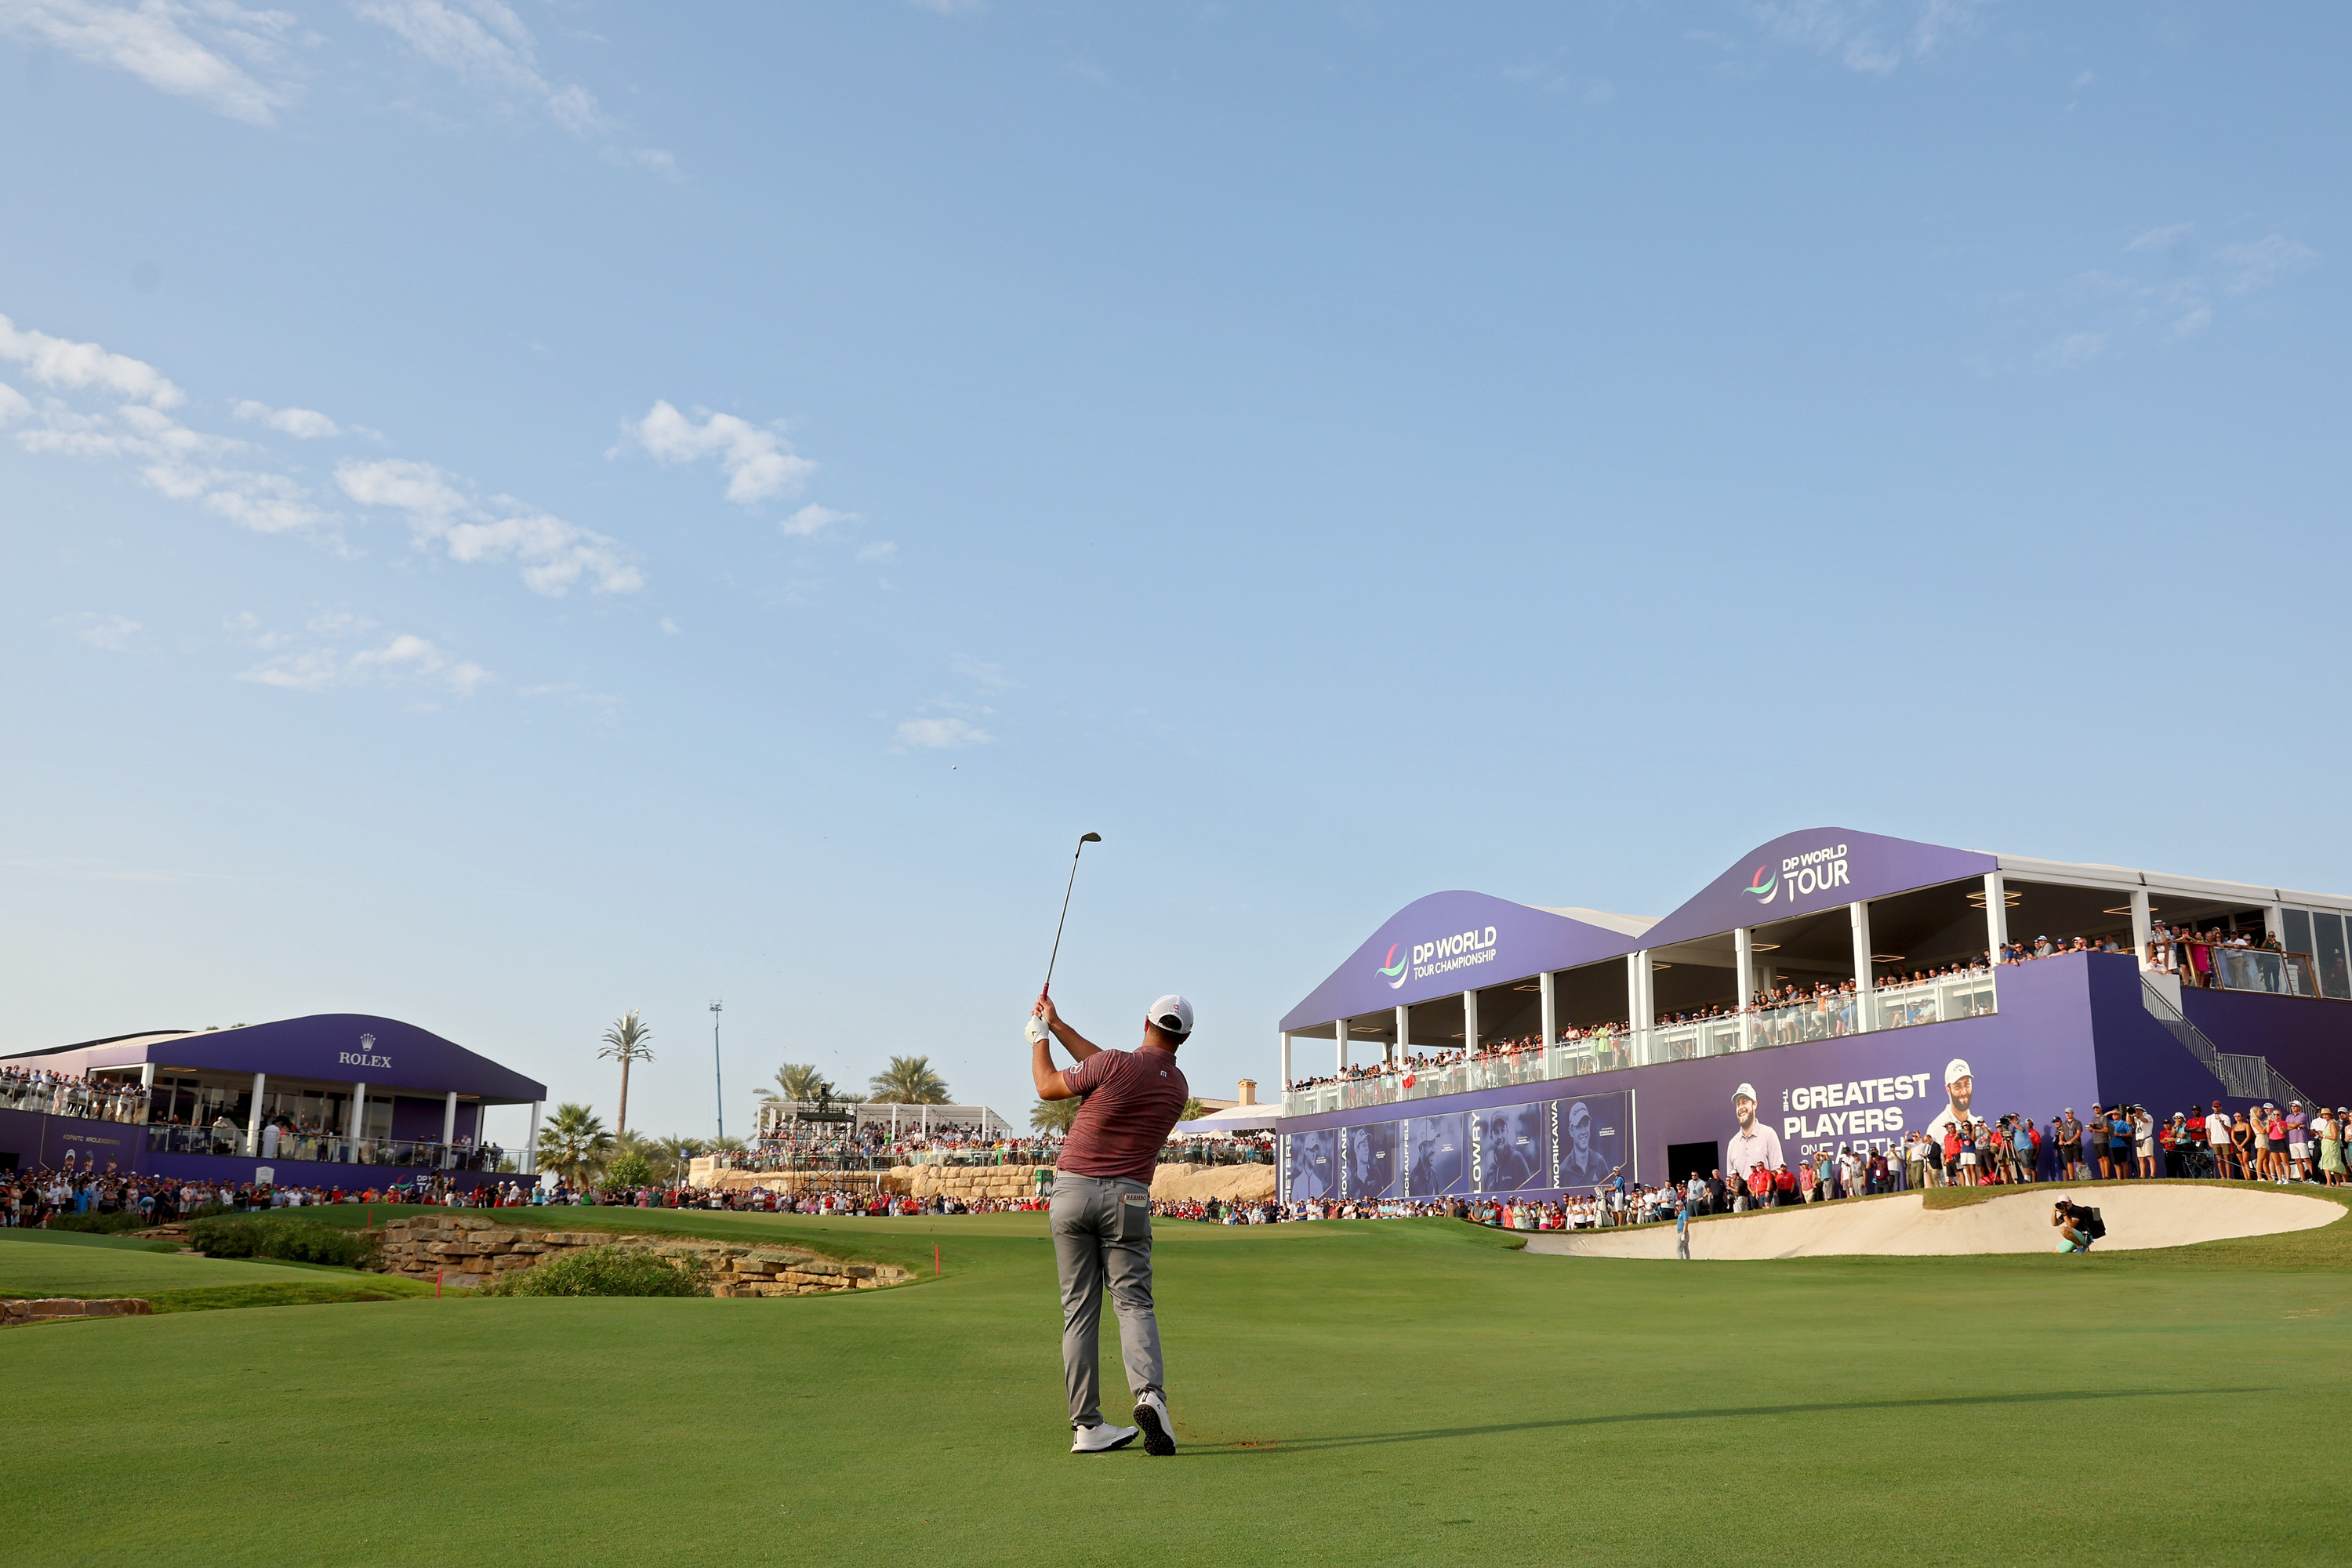 Dubai Golf Book Golf Online Best Golf Courses in Dubai, UAE